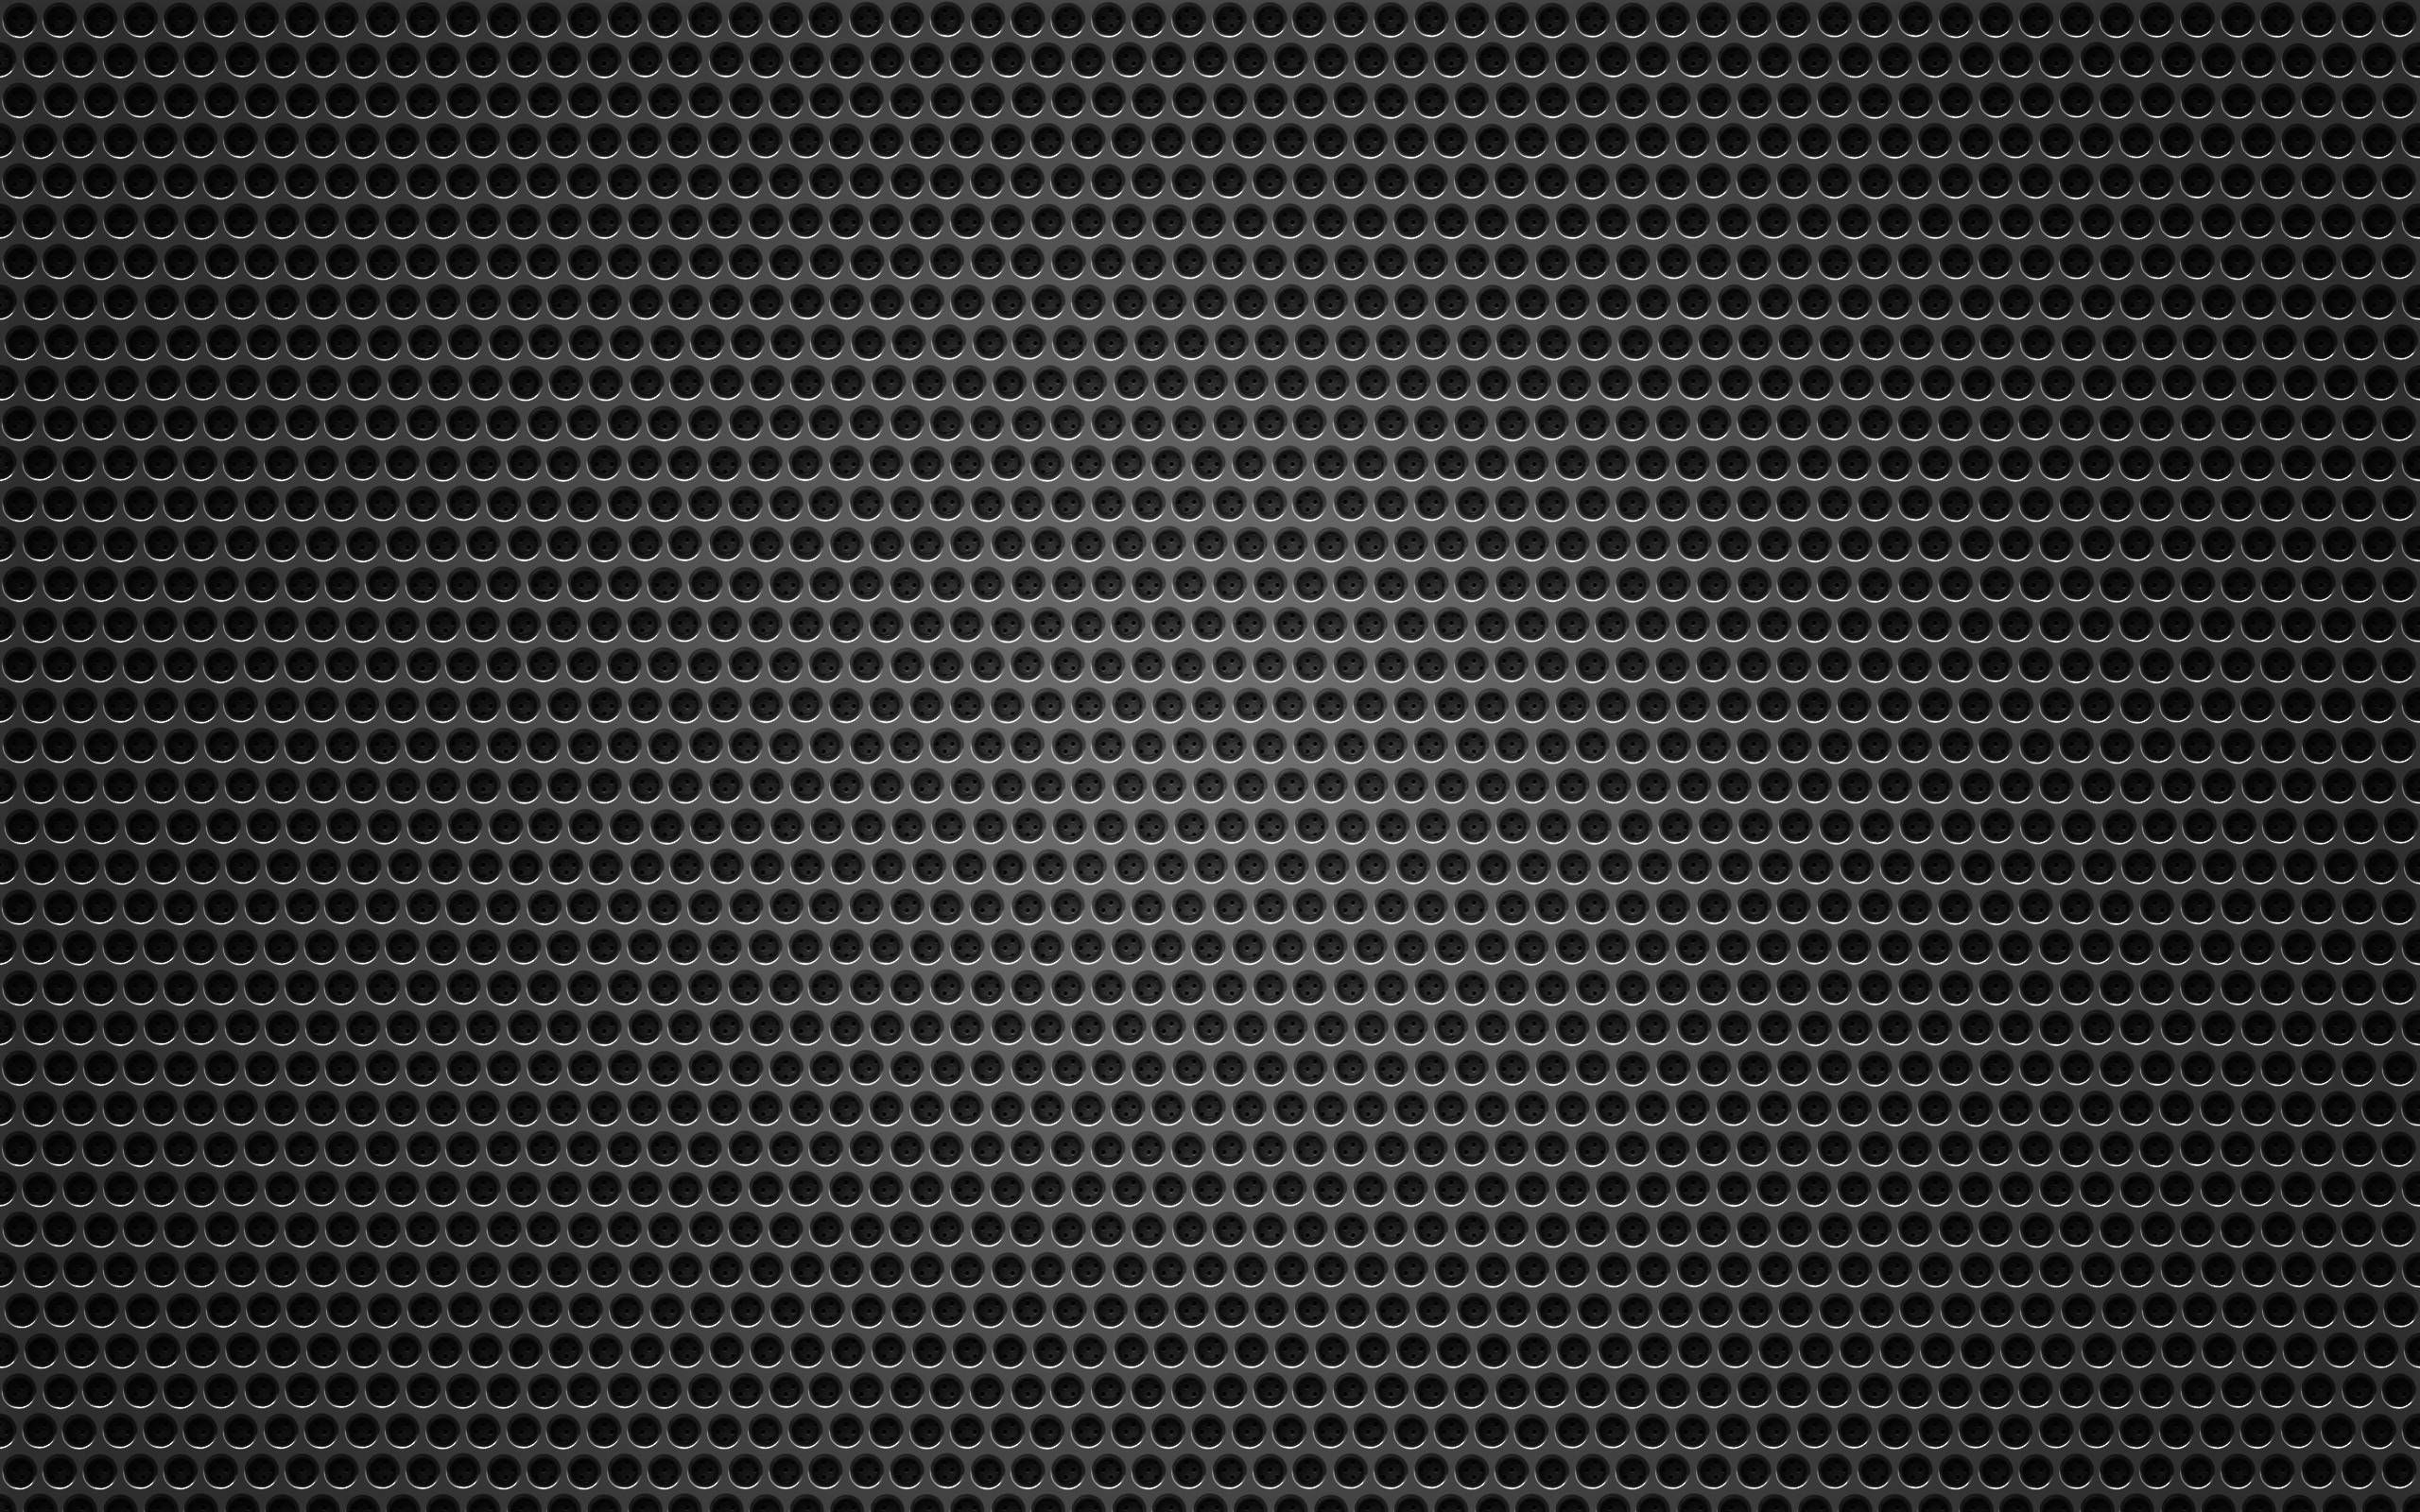 Title Black Carbon Wallpapers Wallpaper Hd Wallpapers Pinterest Dimension 2560 X 1600 File Type Jpg Jpeg 2560x1600